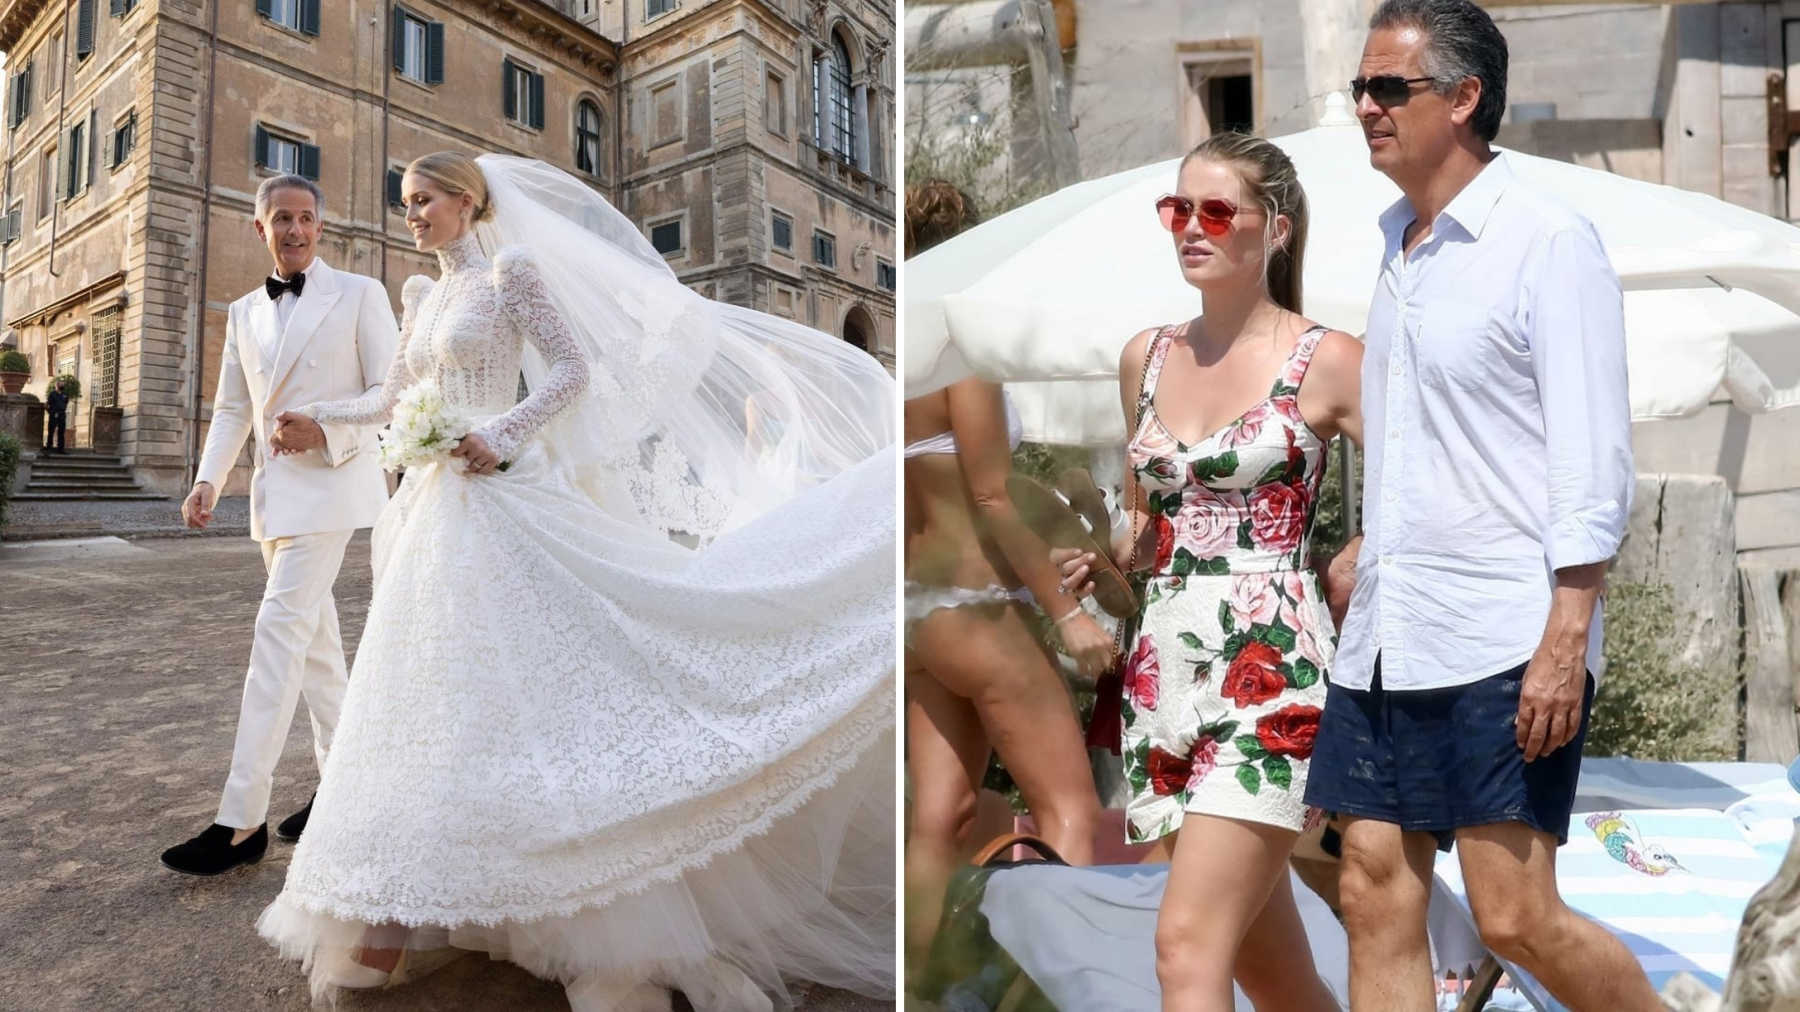 Princess Dianas Niece Lady Kitty Spencer Got Married In A Breathtaking Italian Wedding